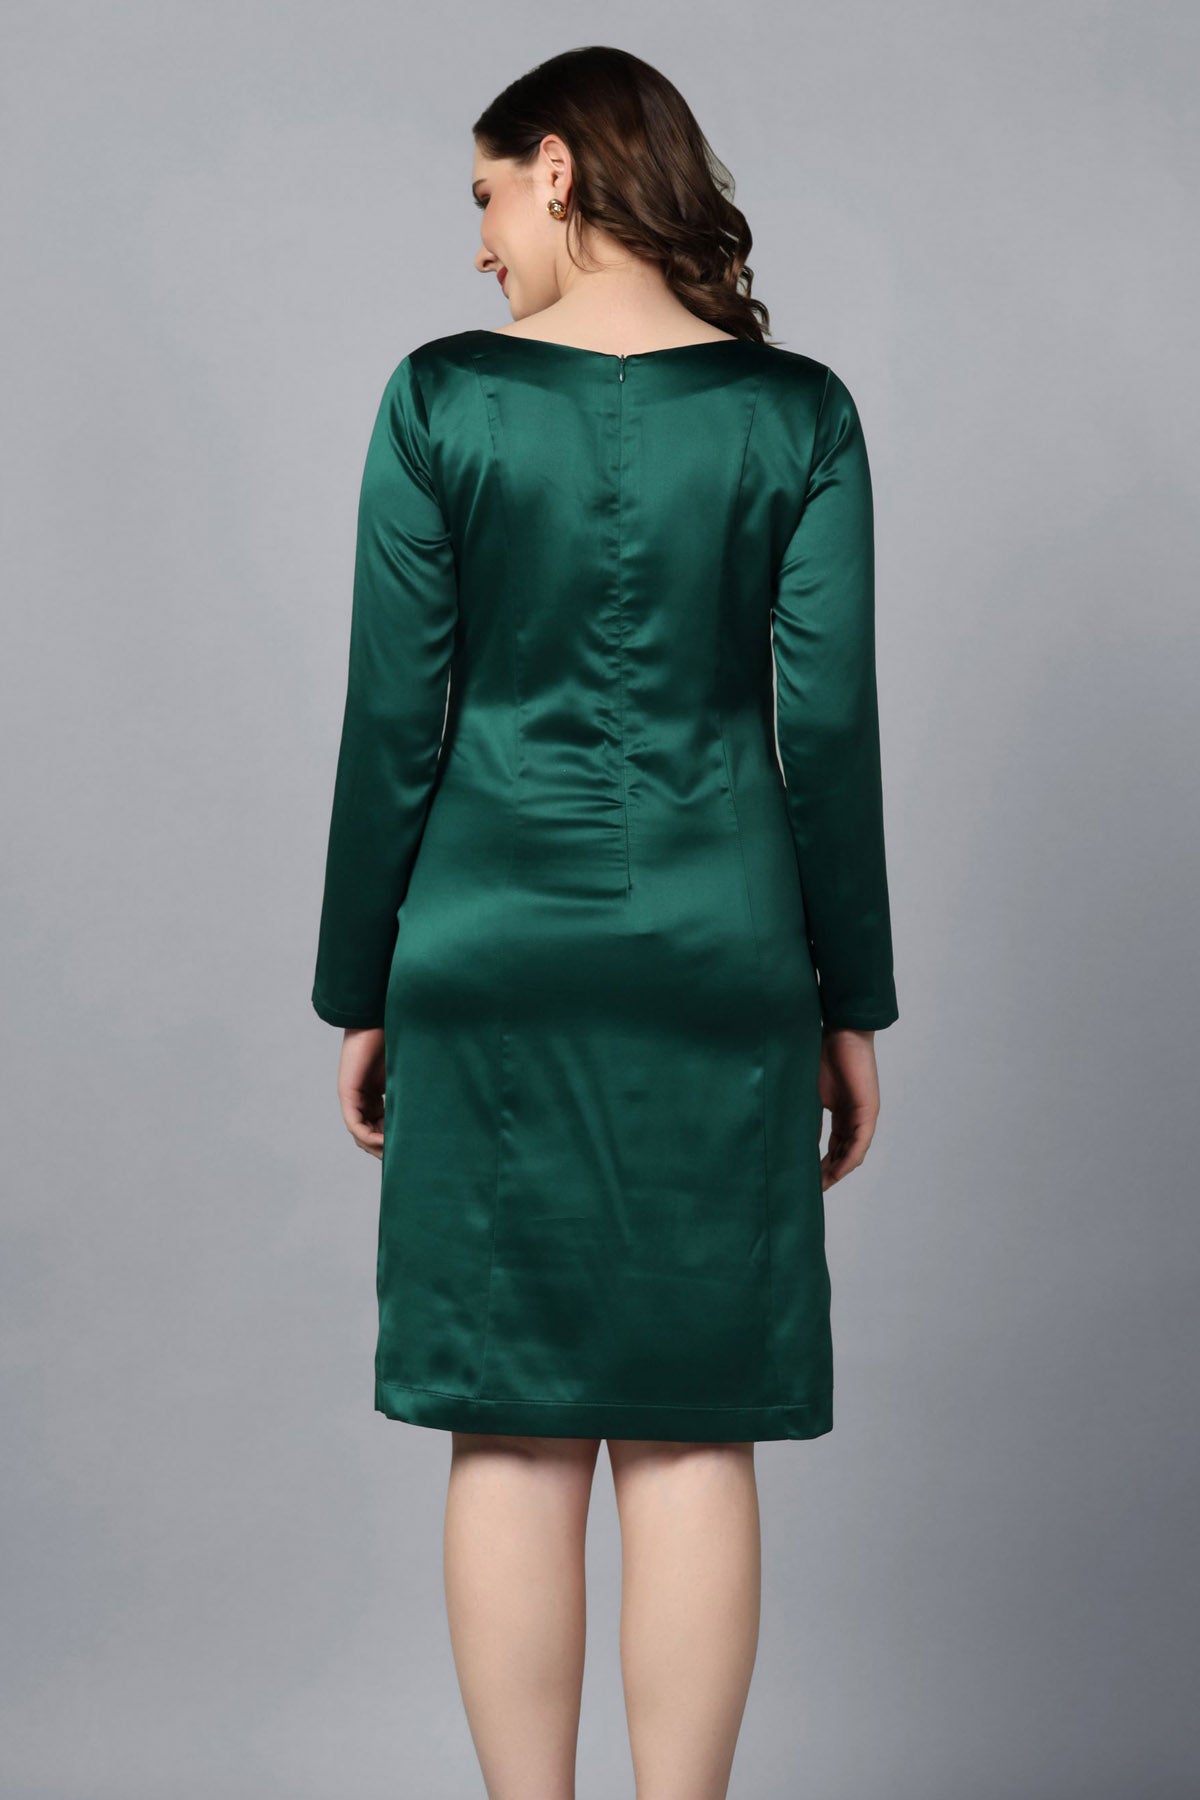 Green Satin Party Dress